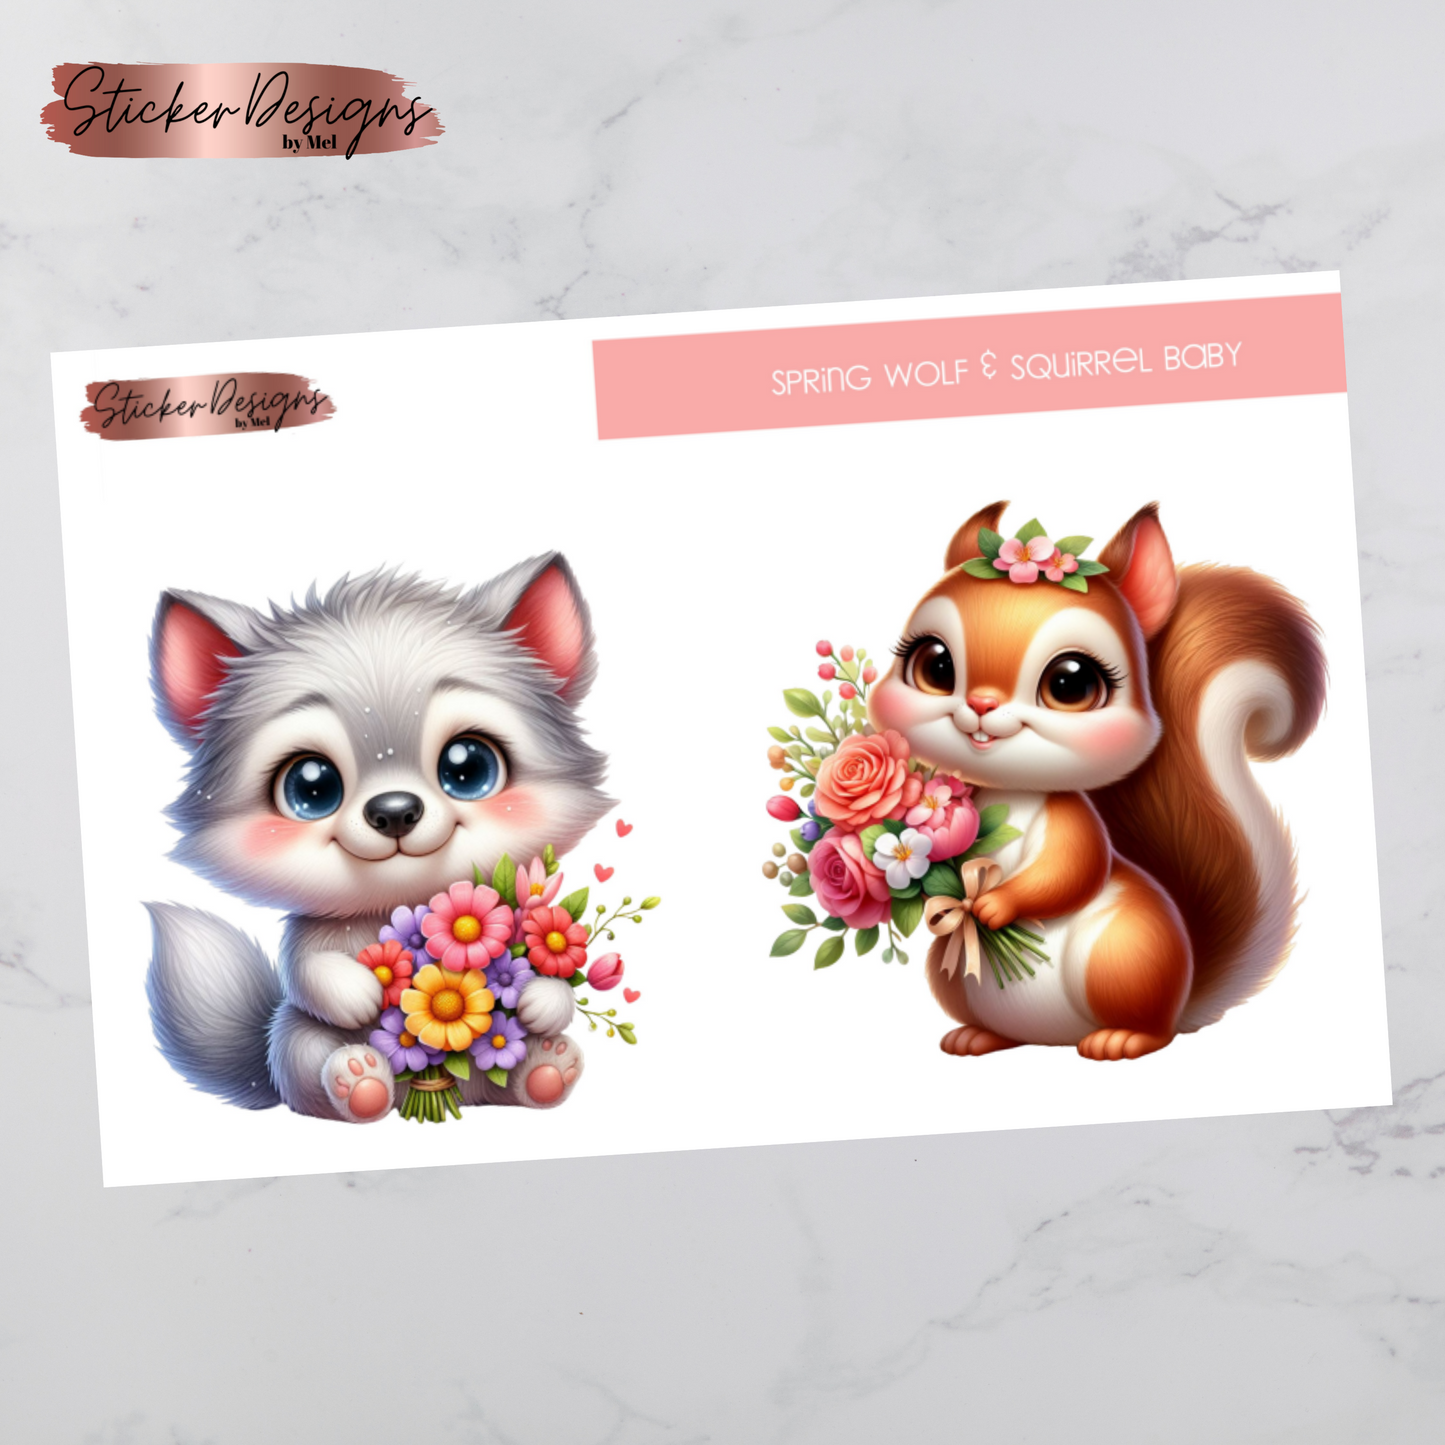 Spring Baby Wolf & Squirrel - Jumbo - Deco Sticker Sheet